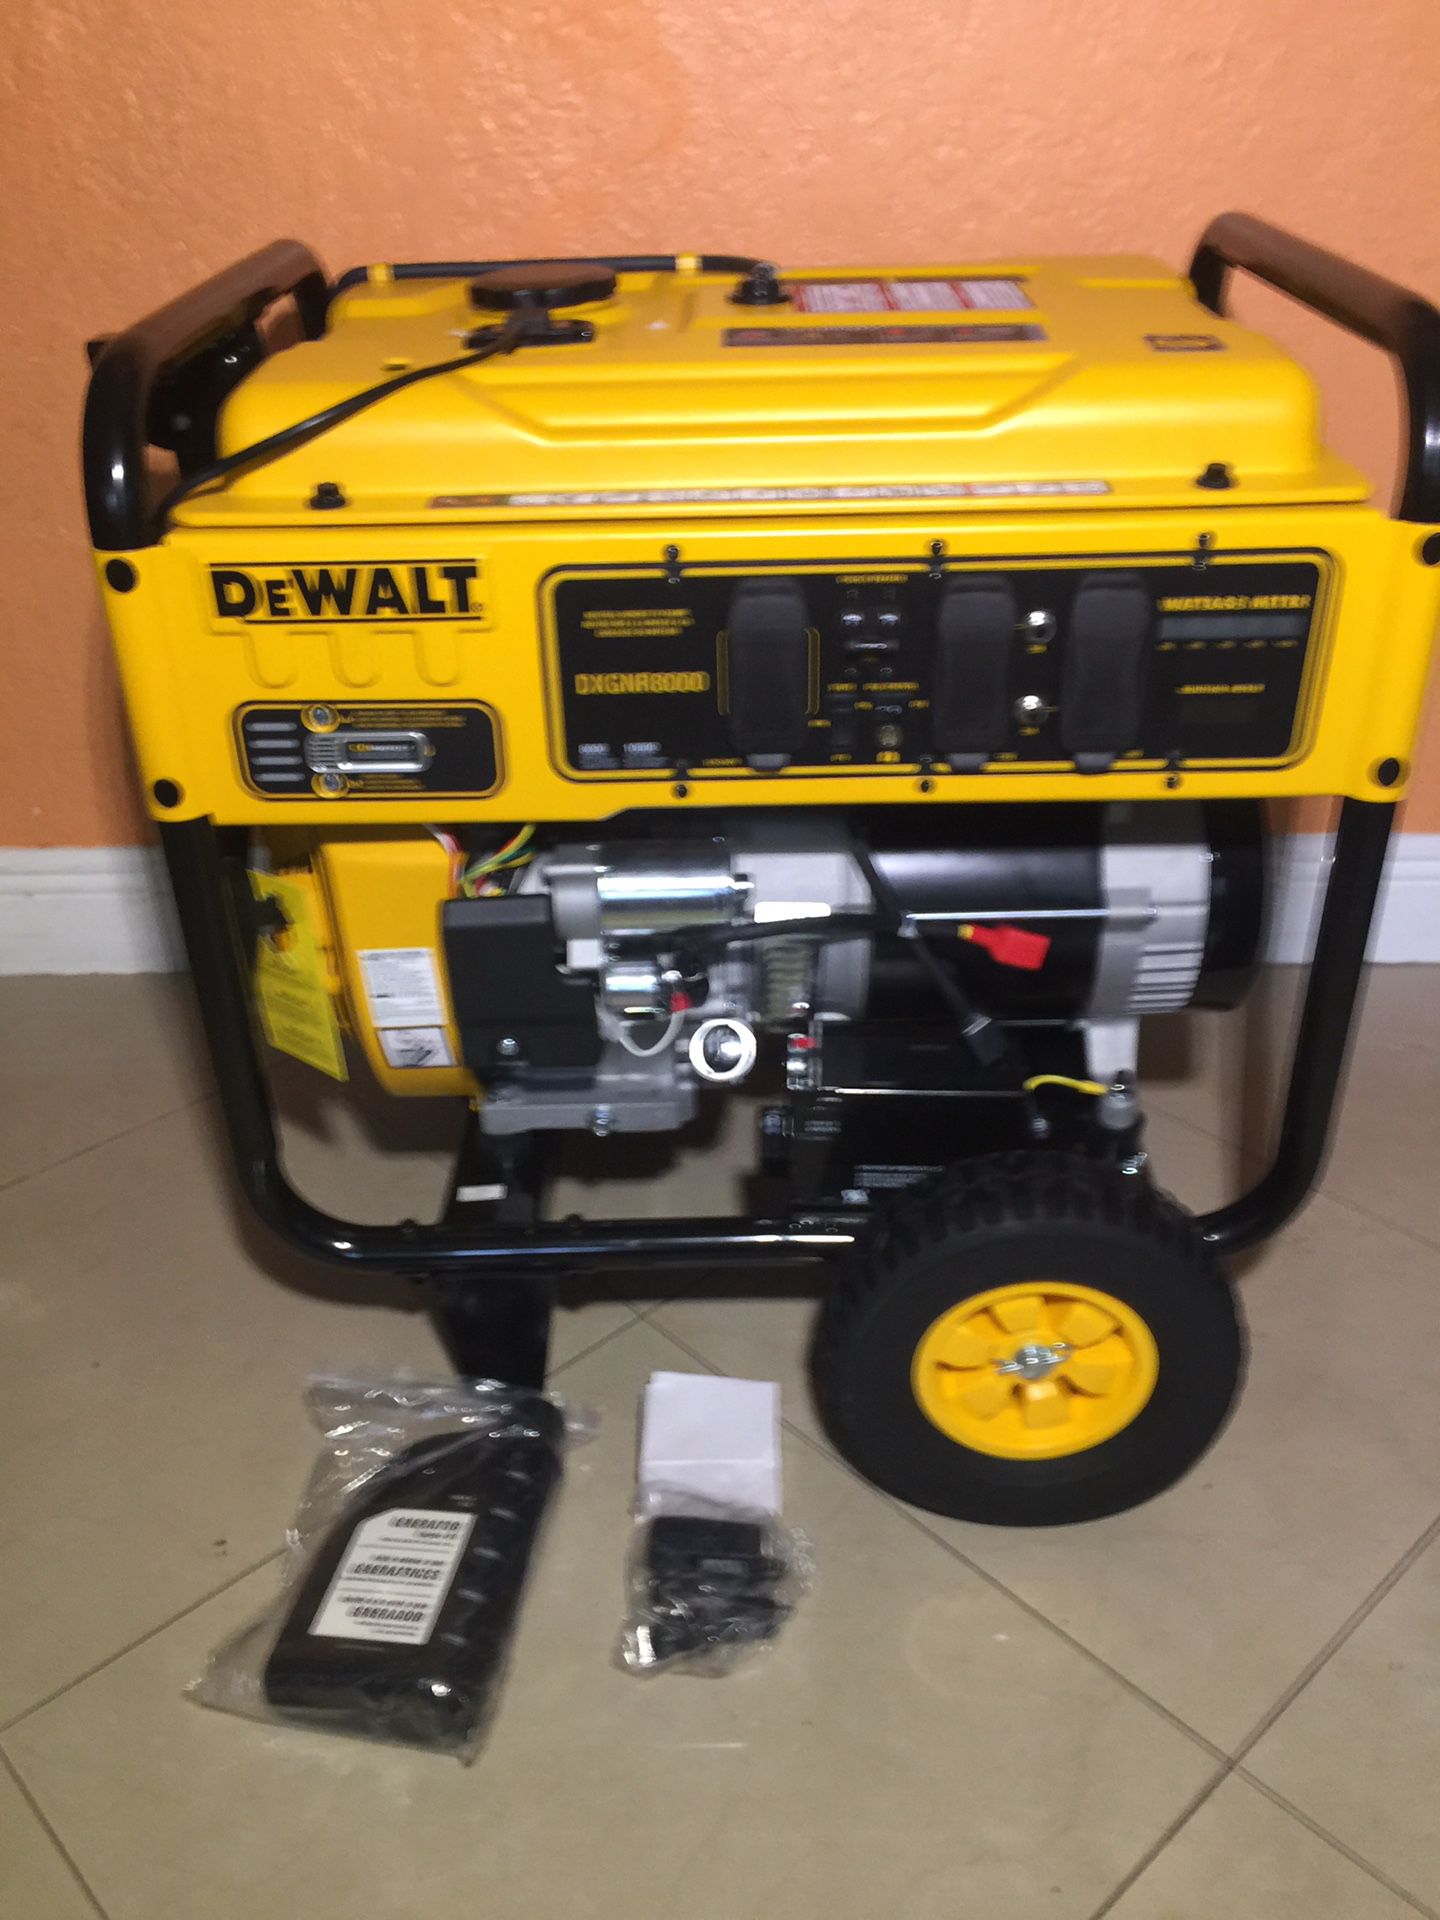 Brand new dewalt generator 8,000 watts DXGNR8000 manual and electric start